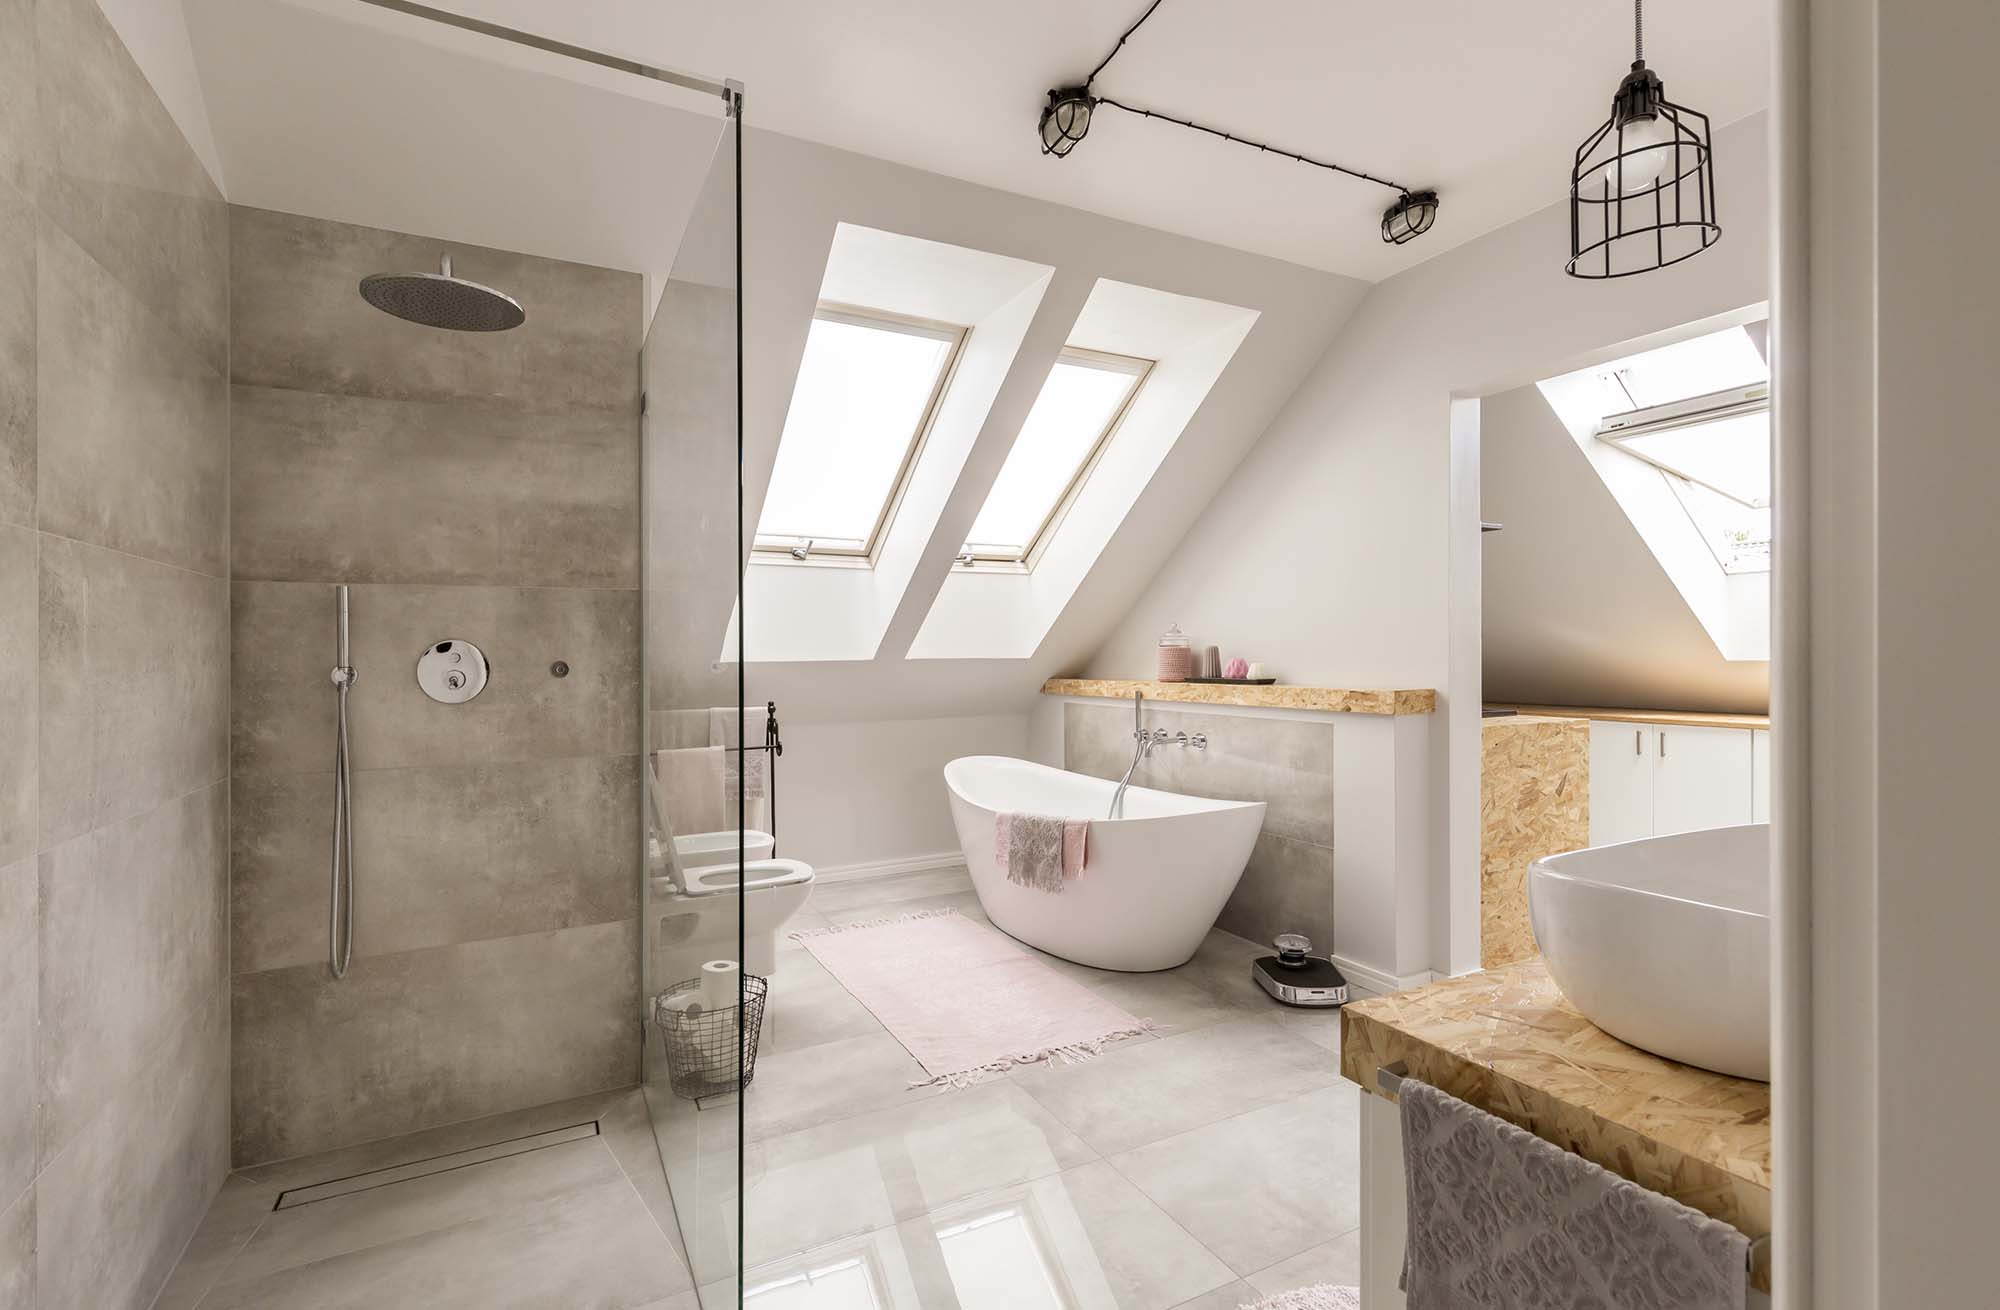 Modern bathroom interior with minimalistic shower and lighting, white toilet, sink, bathtub and roofwindows